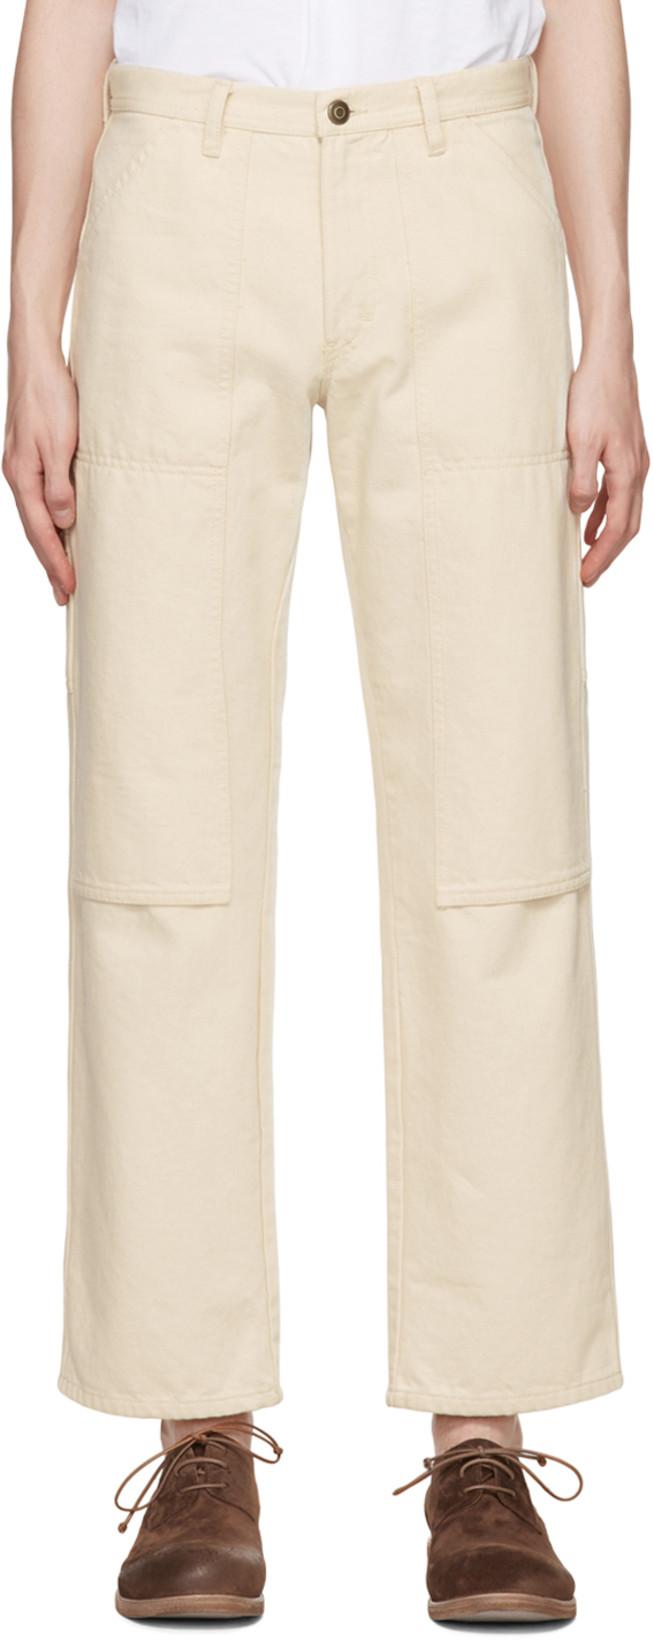 SSENSE Exclusive Off-White Denim Trousers by WINNIE NEW YORK